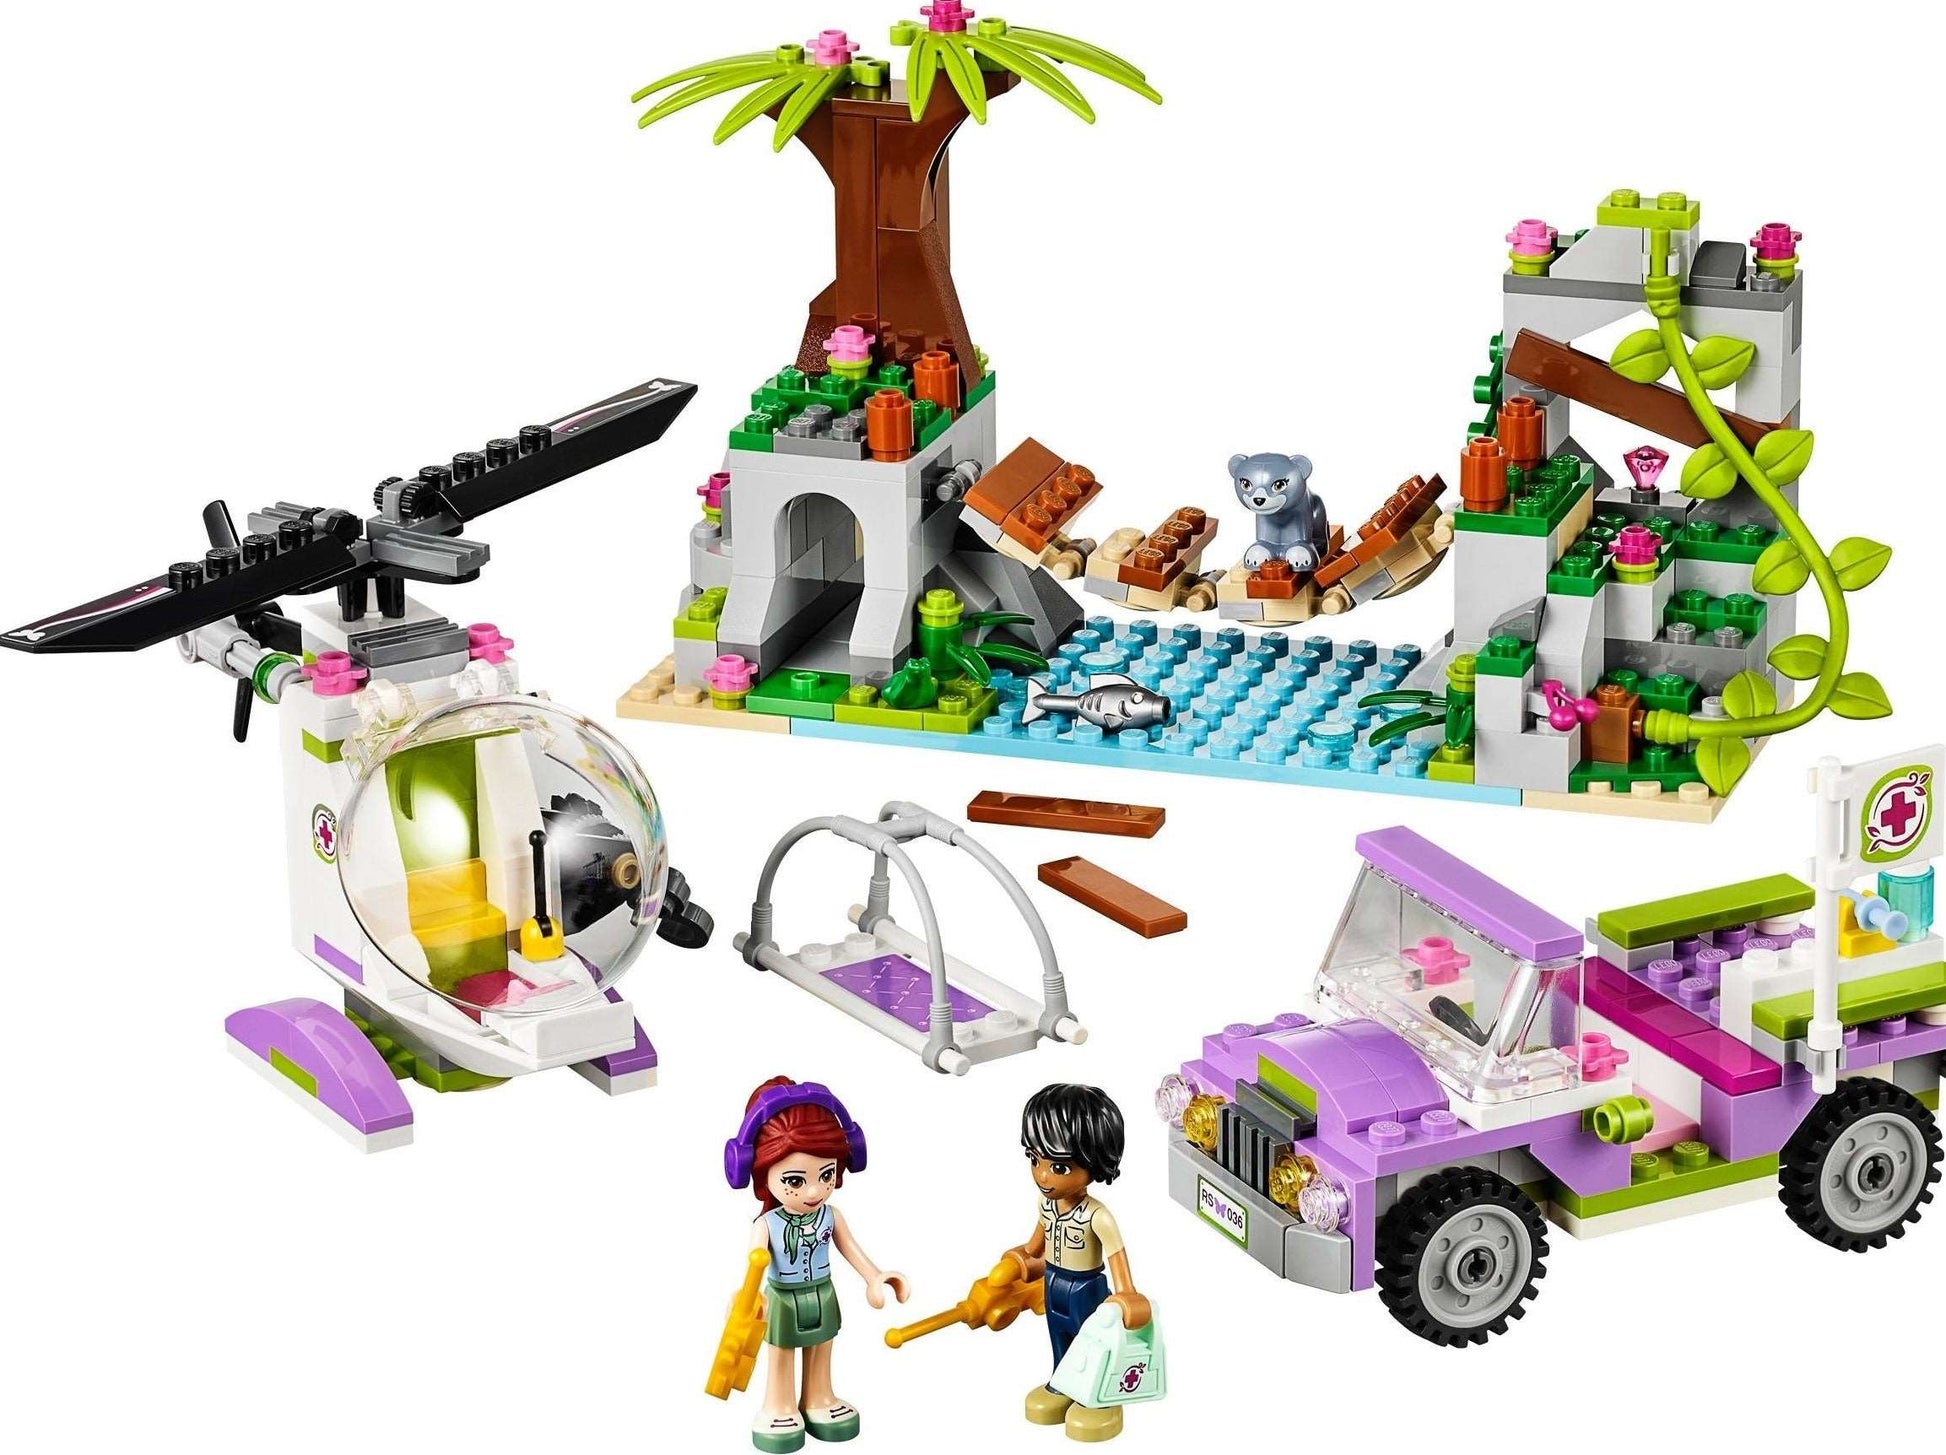 7 Lego Friends sets